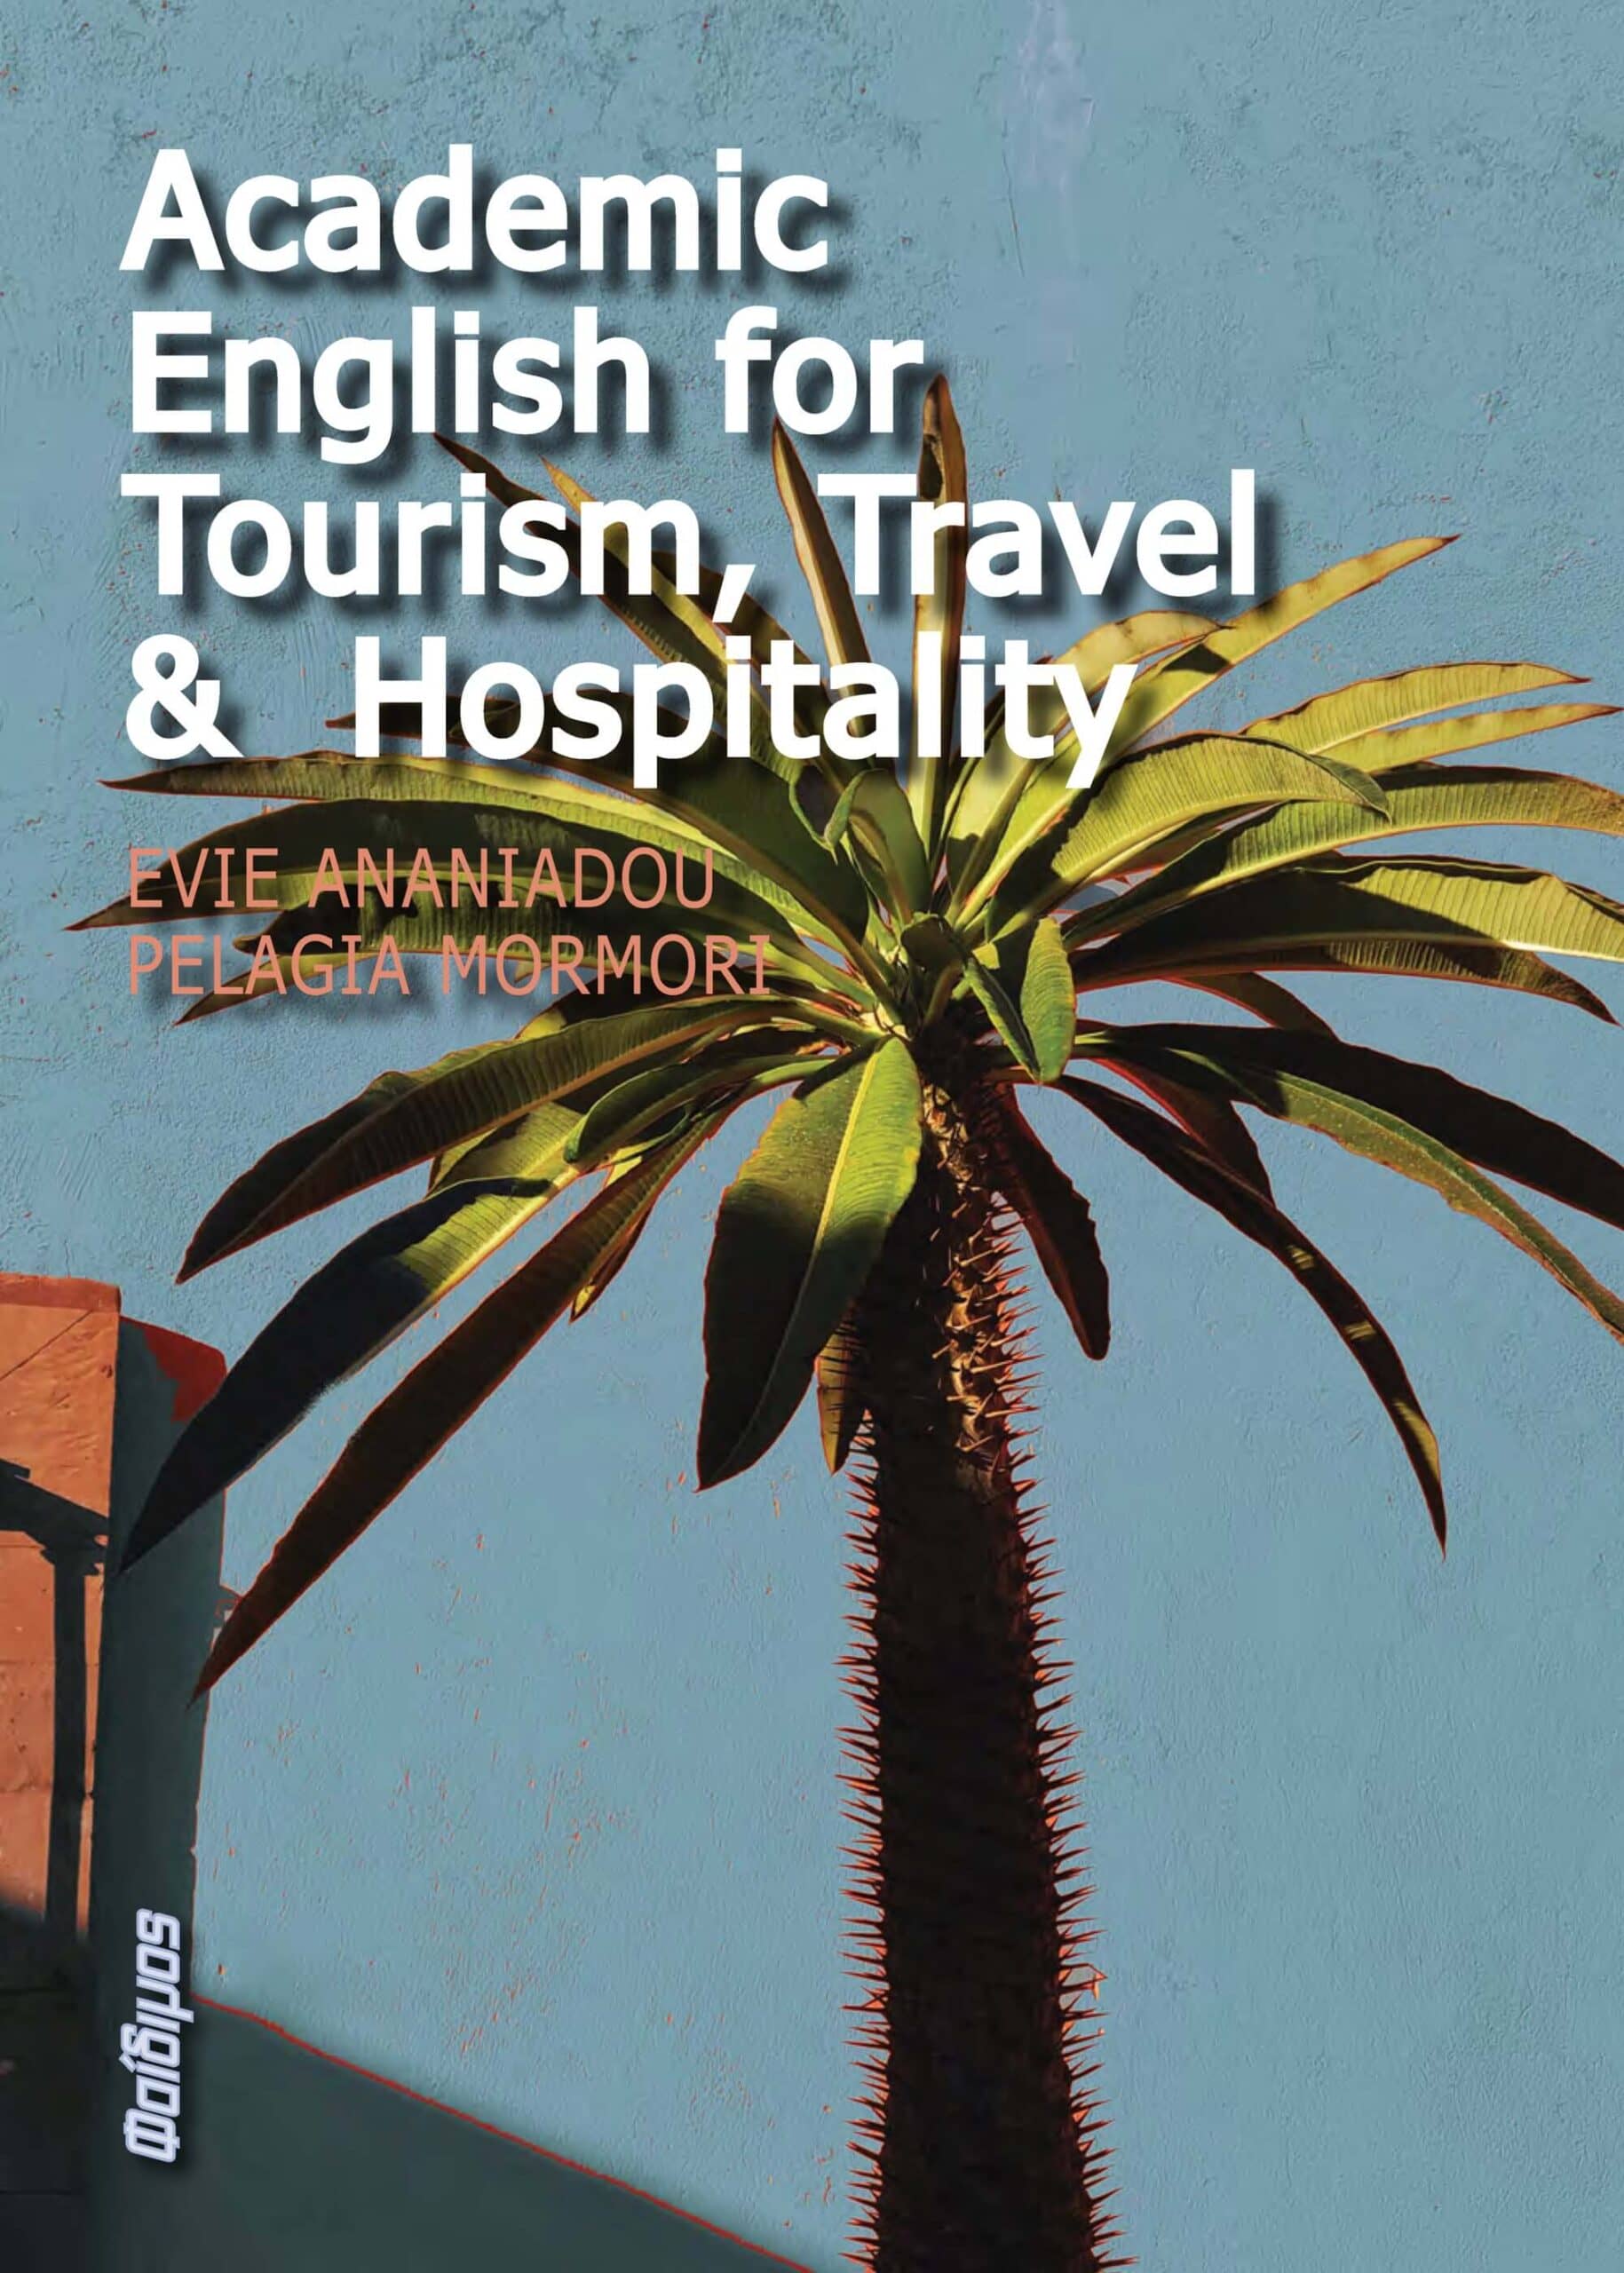 english for tourism books